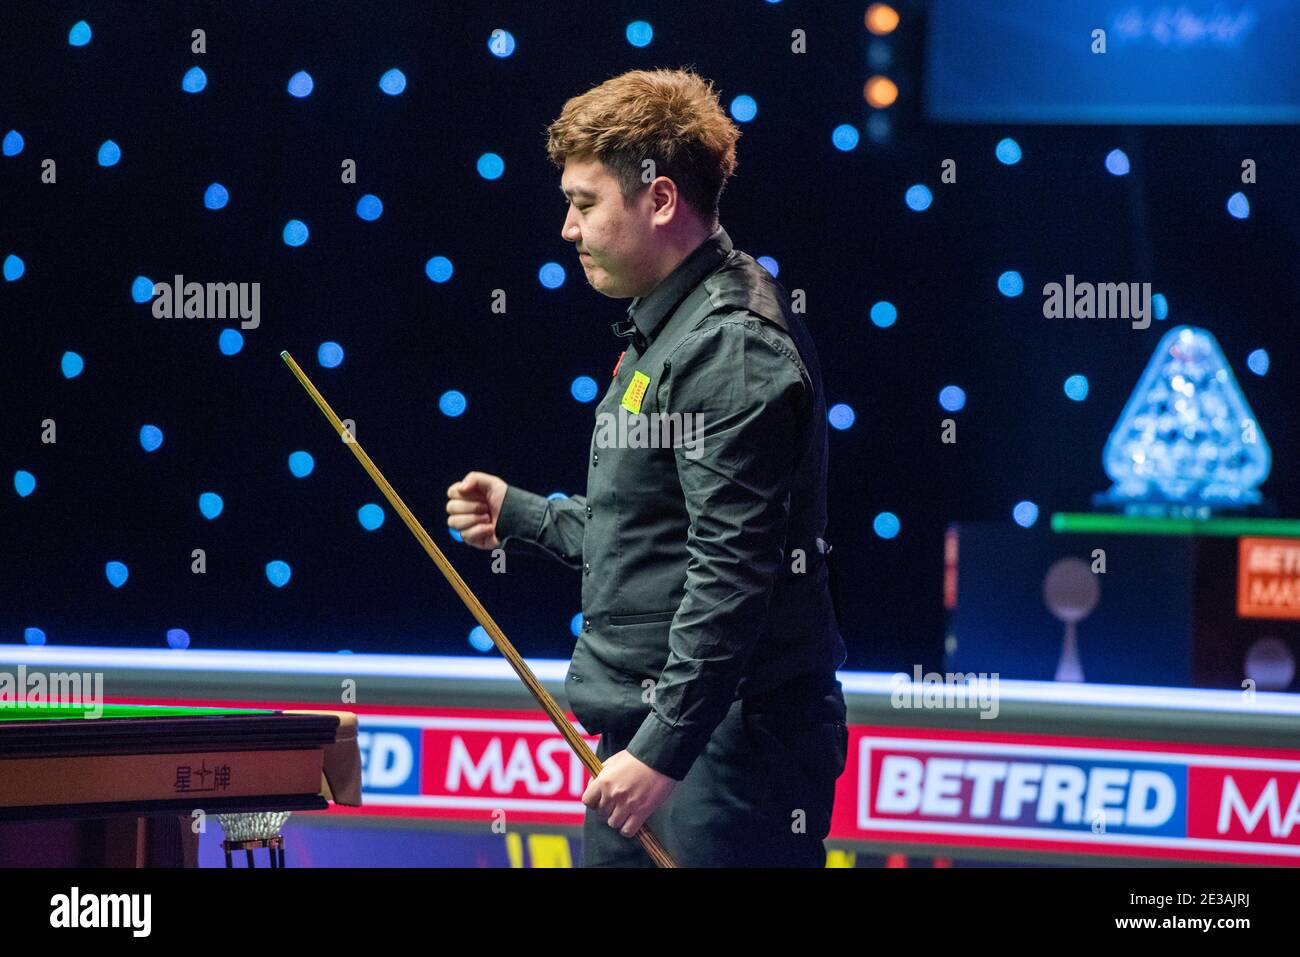 Milton Keynes, Großbritannien. Januar 2021. Chinas Yan Bingtao feiert im Finale mit Schottlands John Higgins beim Snooker Masters in Milton Keynes, Großbritannien, am 17